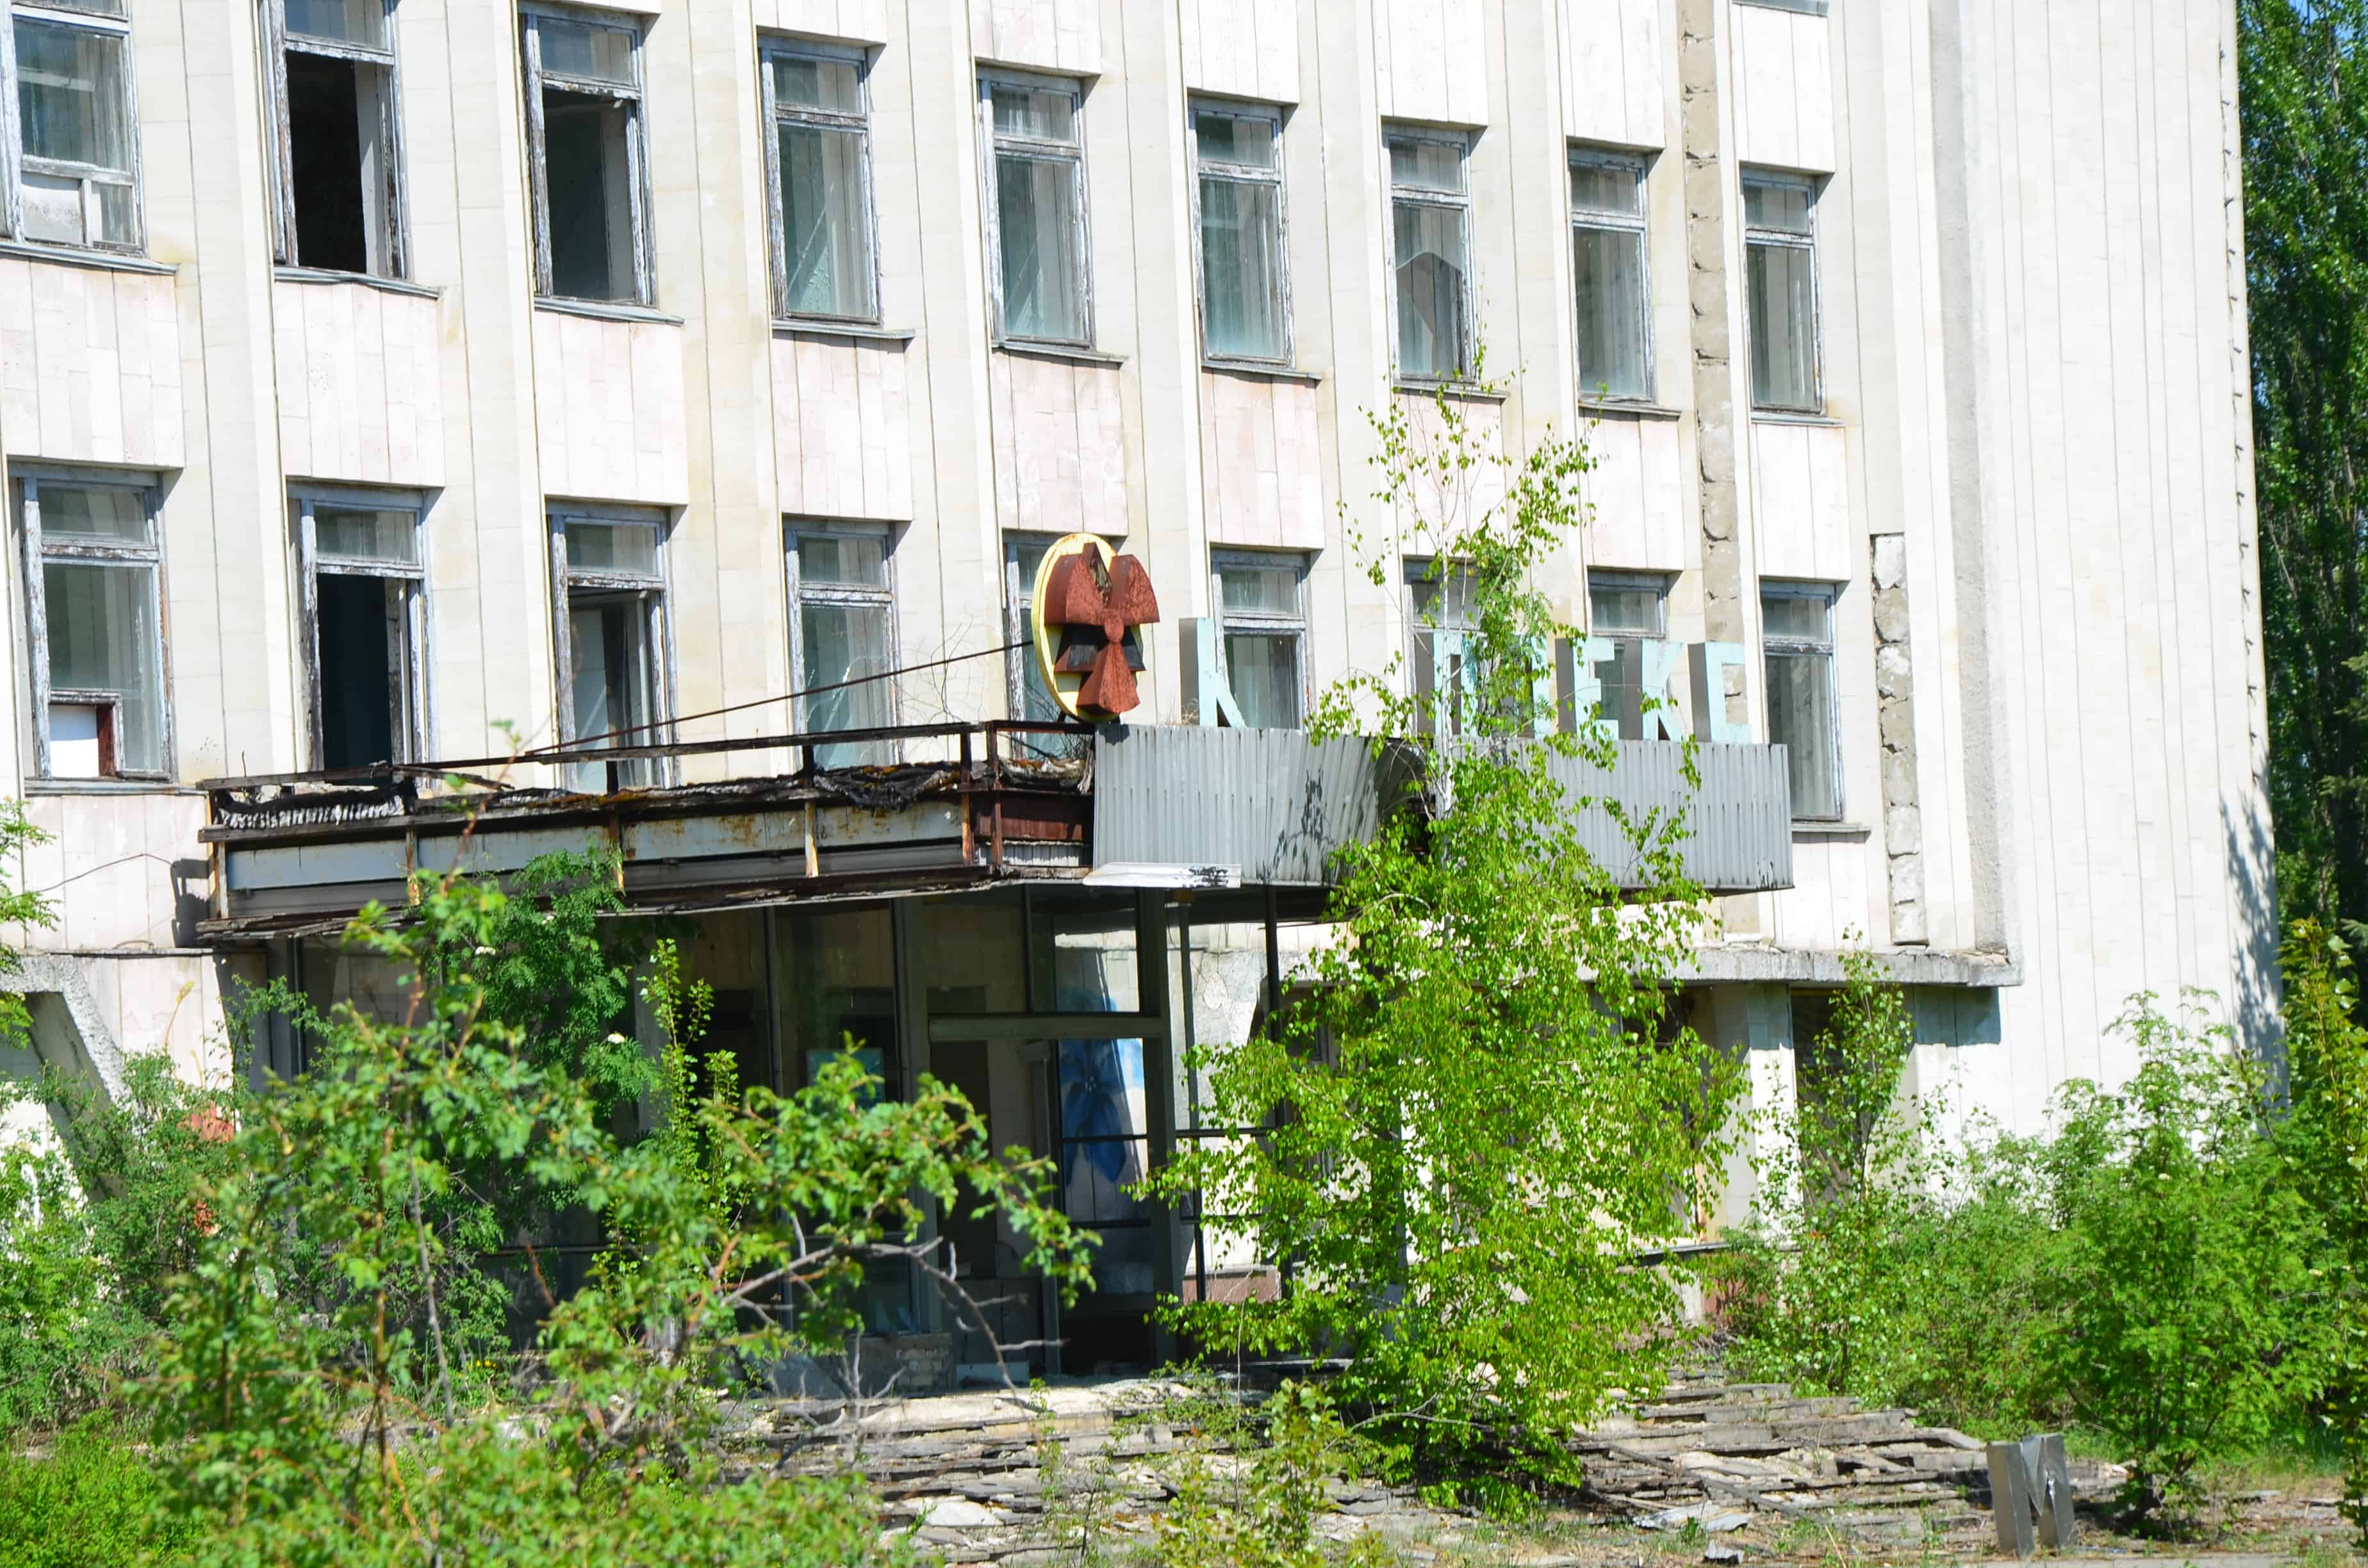 City administration building in Pripyat, Chernobyl Exclusion Zone, Ukraine